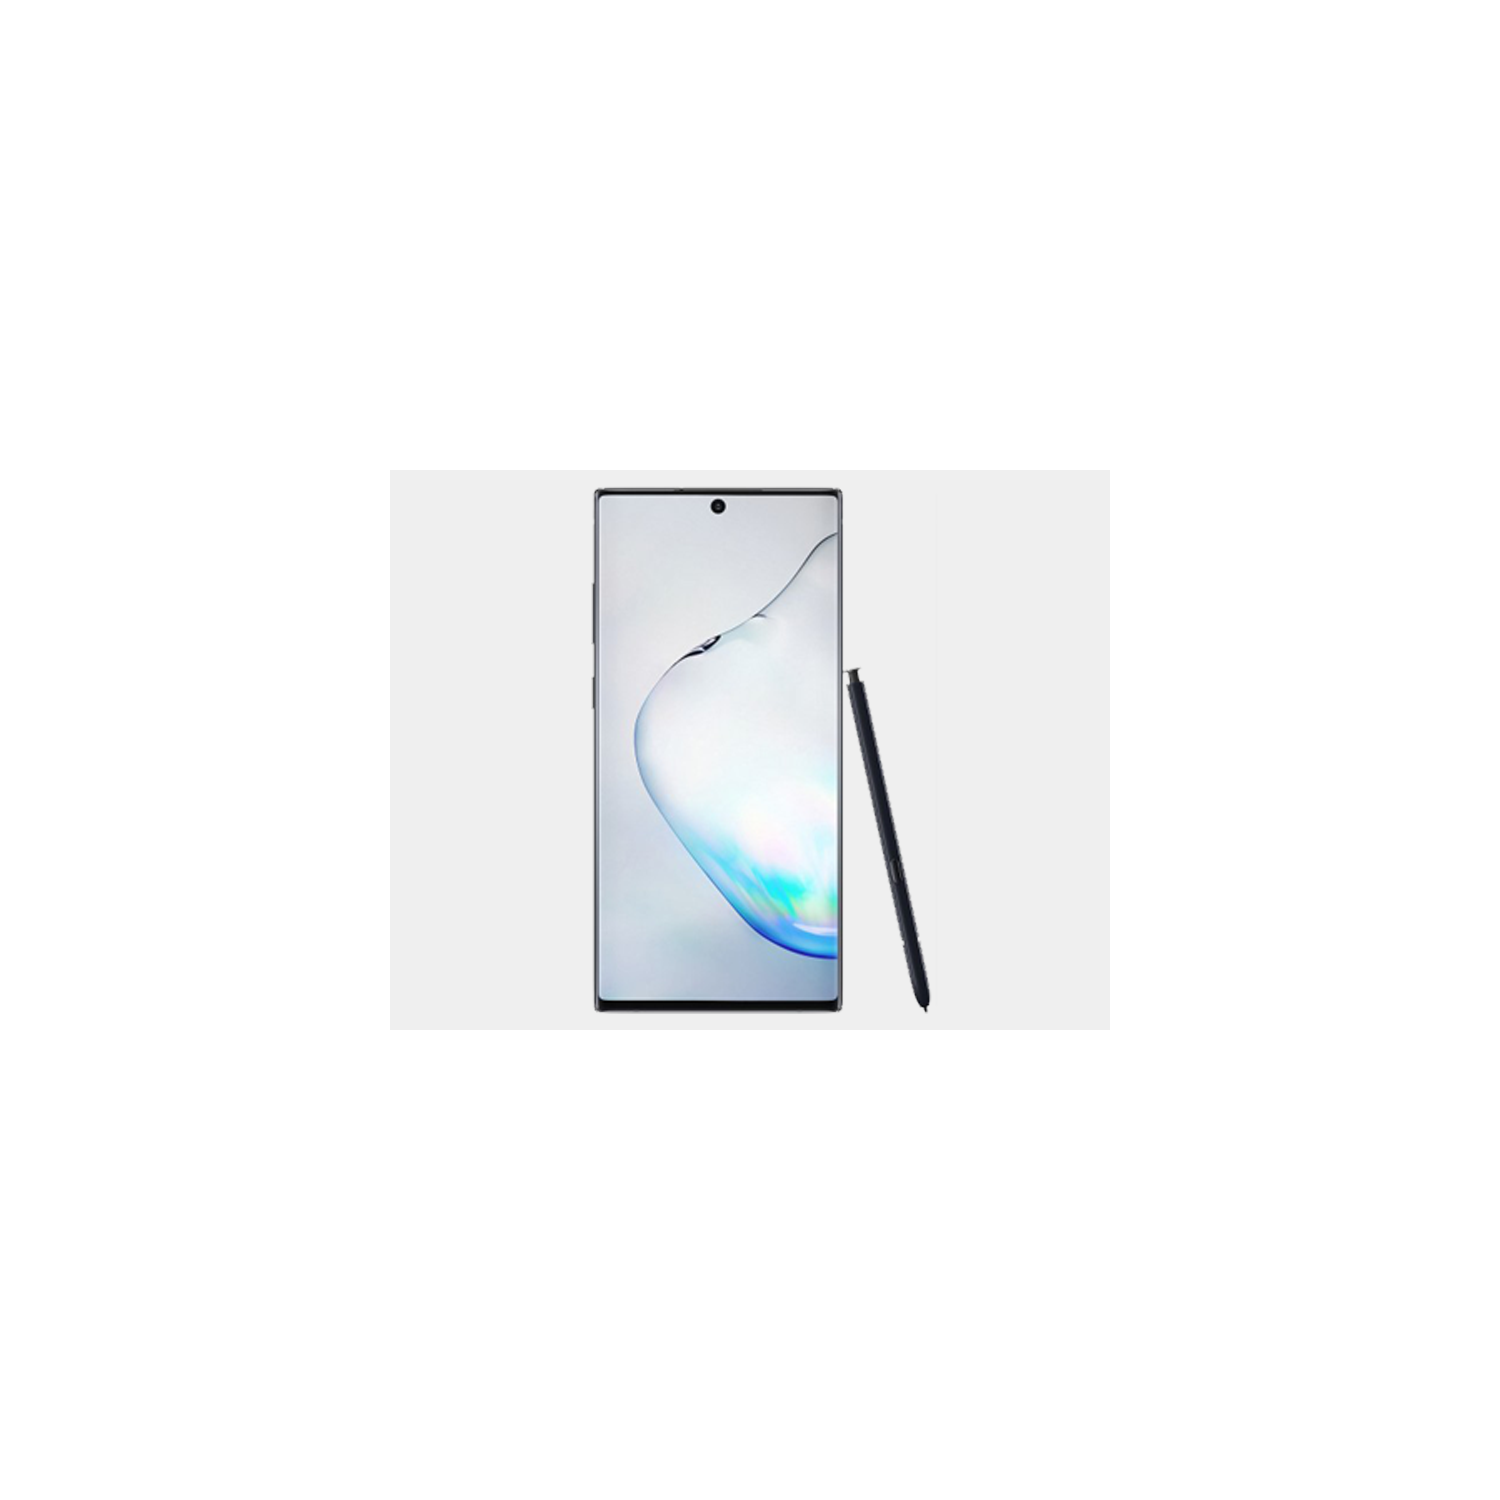 Samsung Galaxy Note 10+ Dual Sim Smartphone 512GB 12GB RAM - Black - Unlocked International Model w/ Seller Provided Warranty